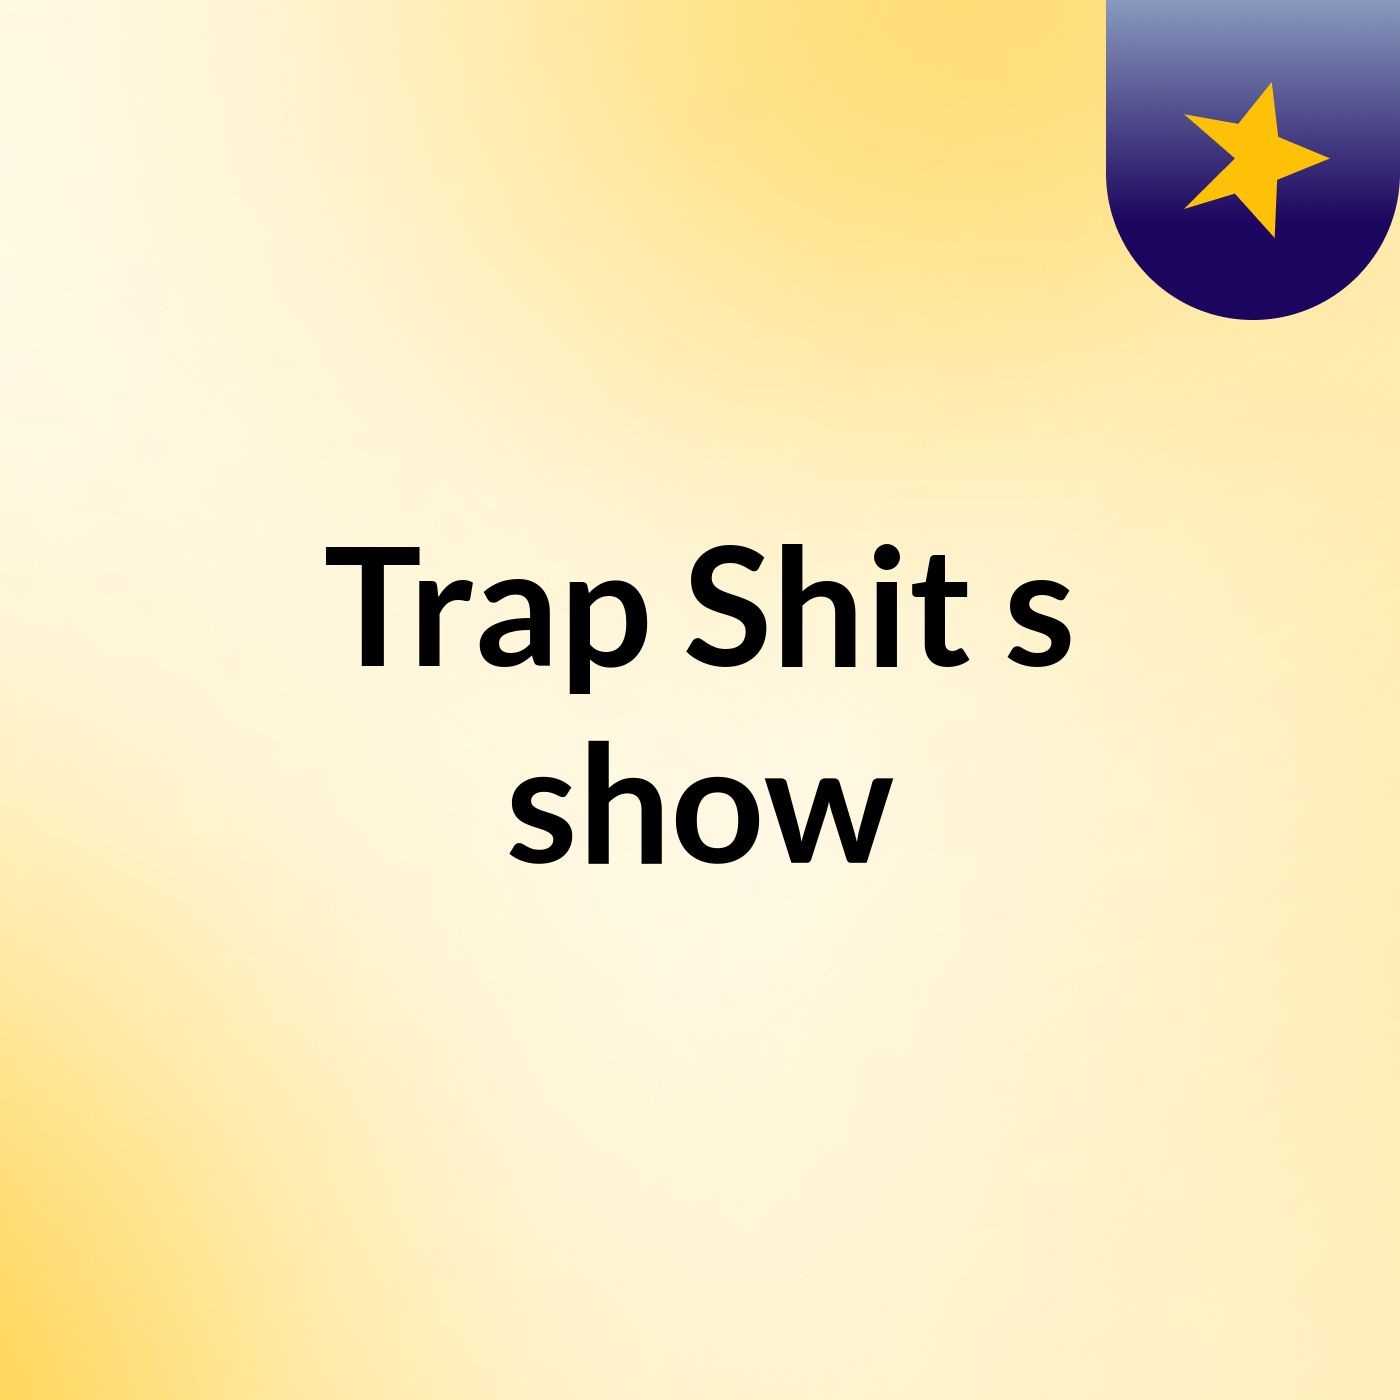 Trap Shit's show